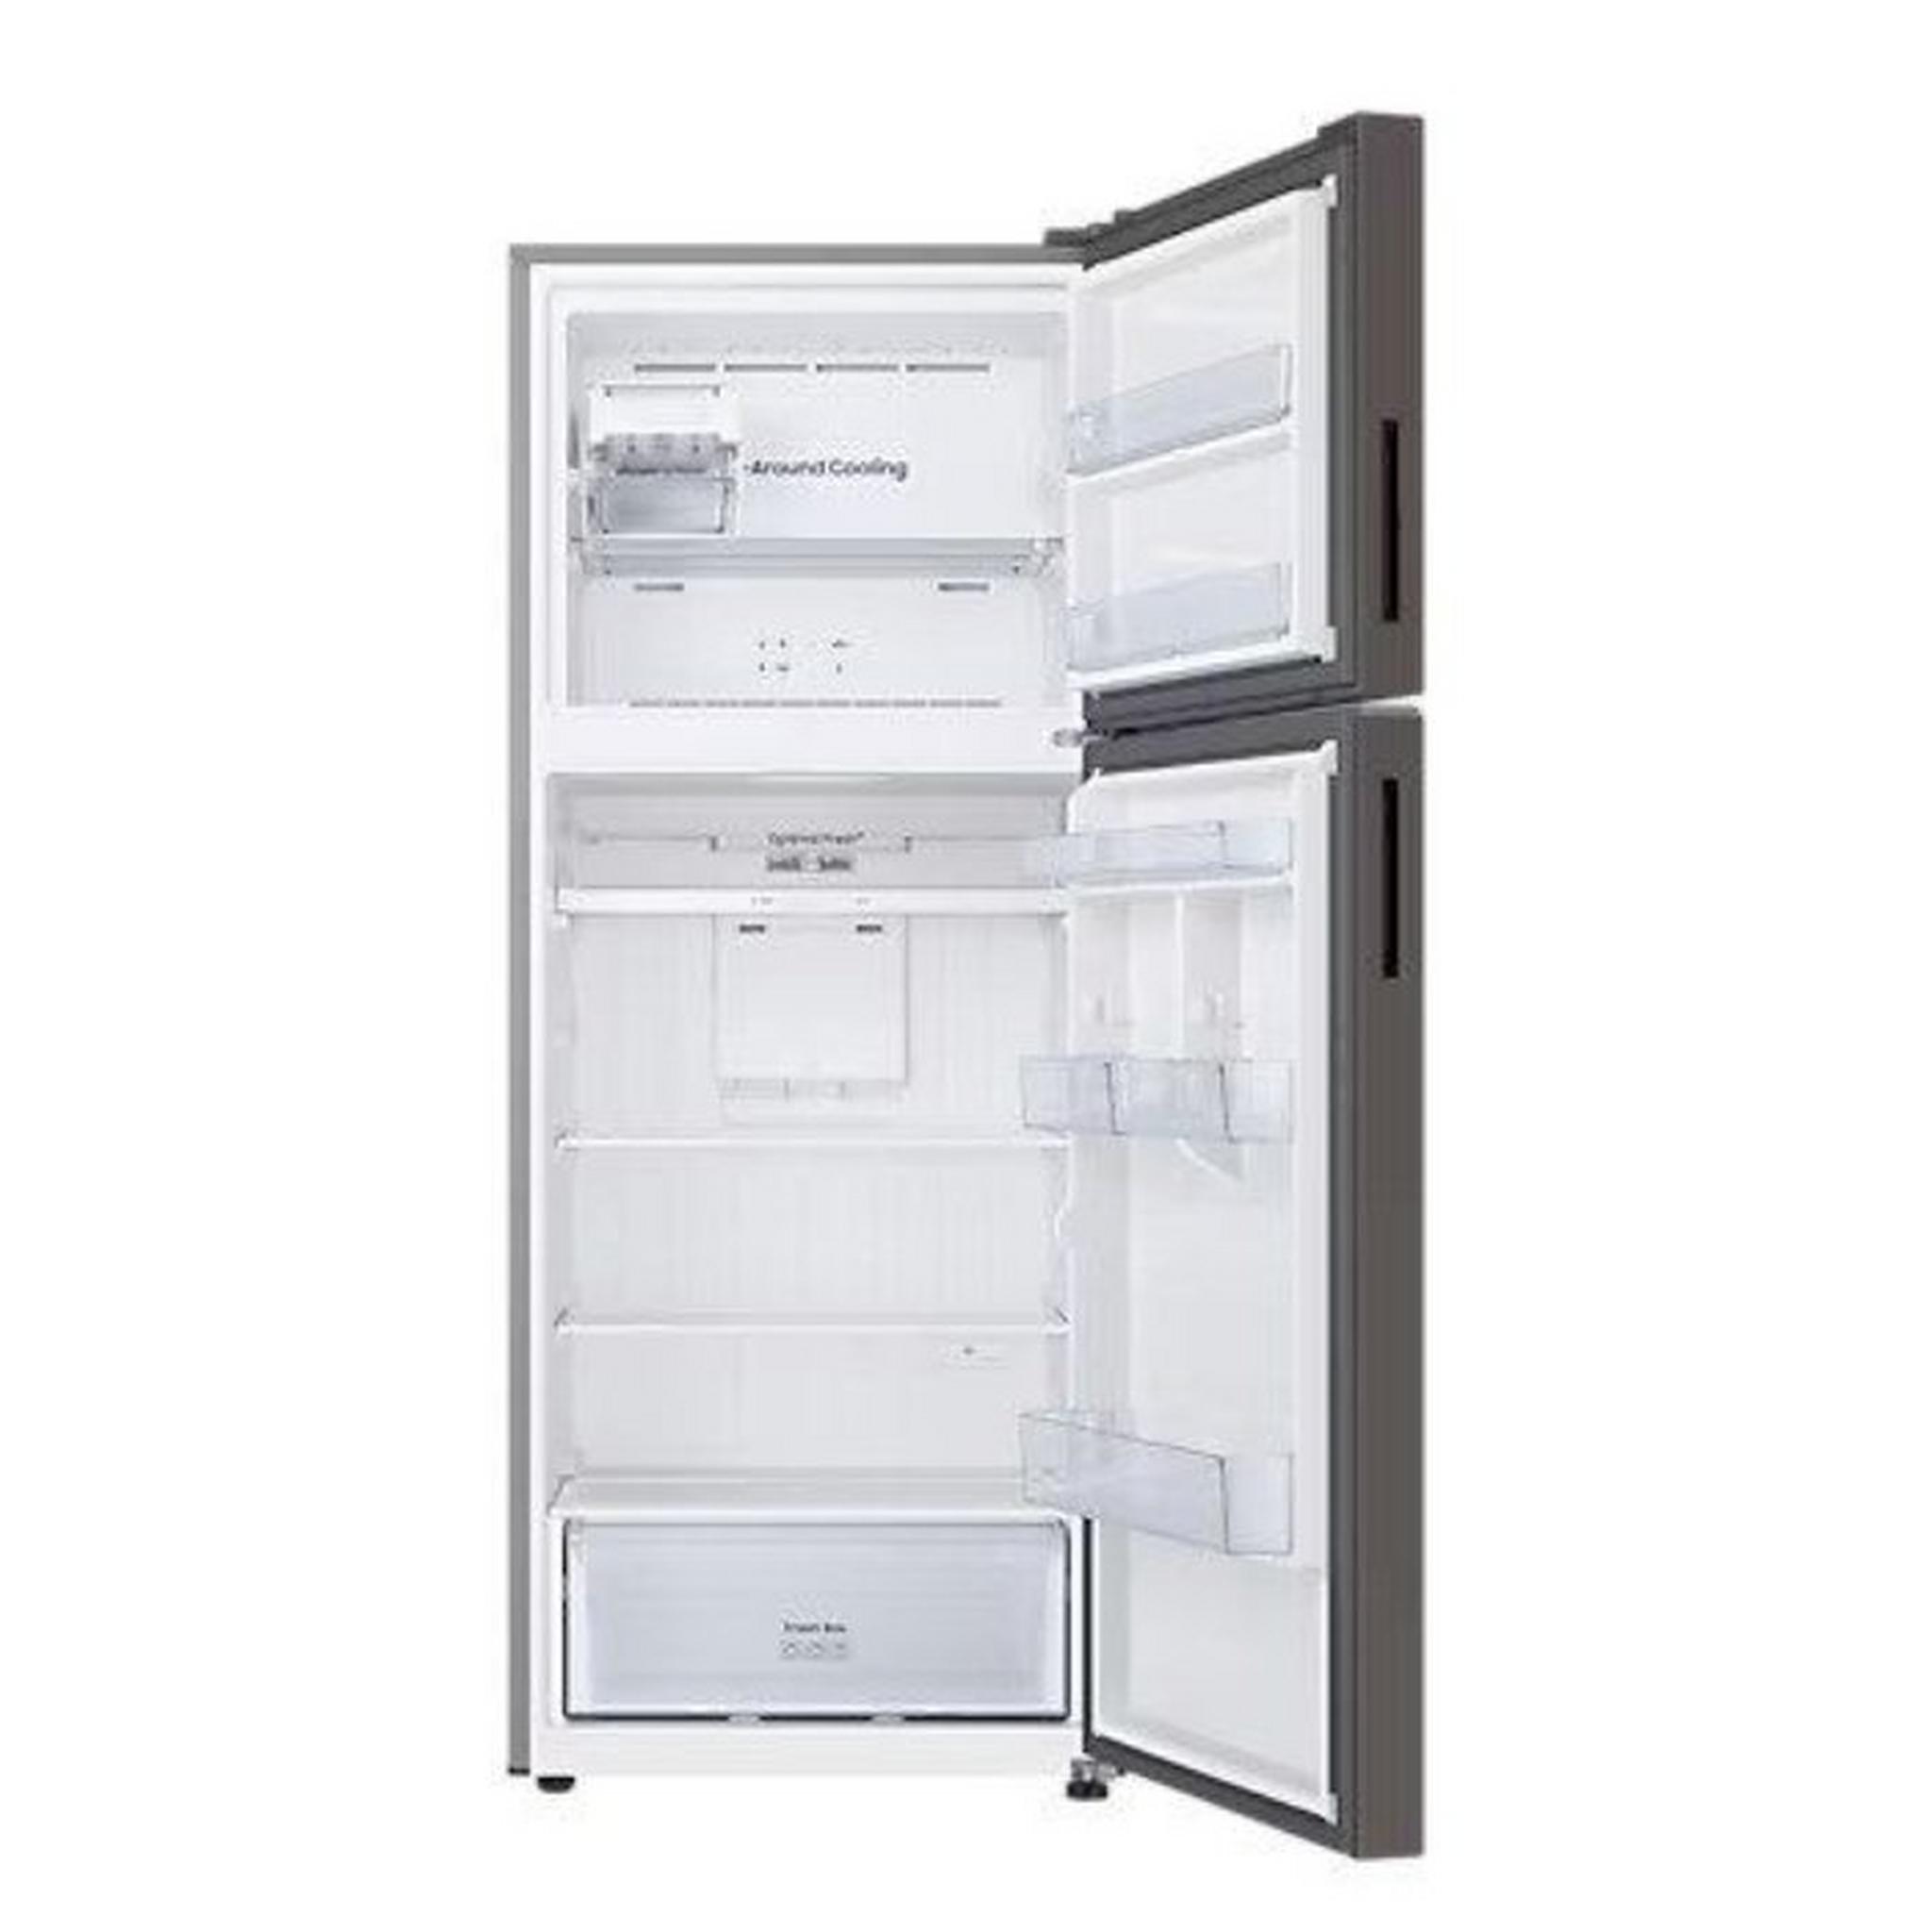 Samsung Refrigerator, 600L , 21 CFT with Bespoke Design - Cotta Charcoal